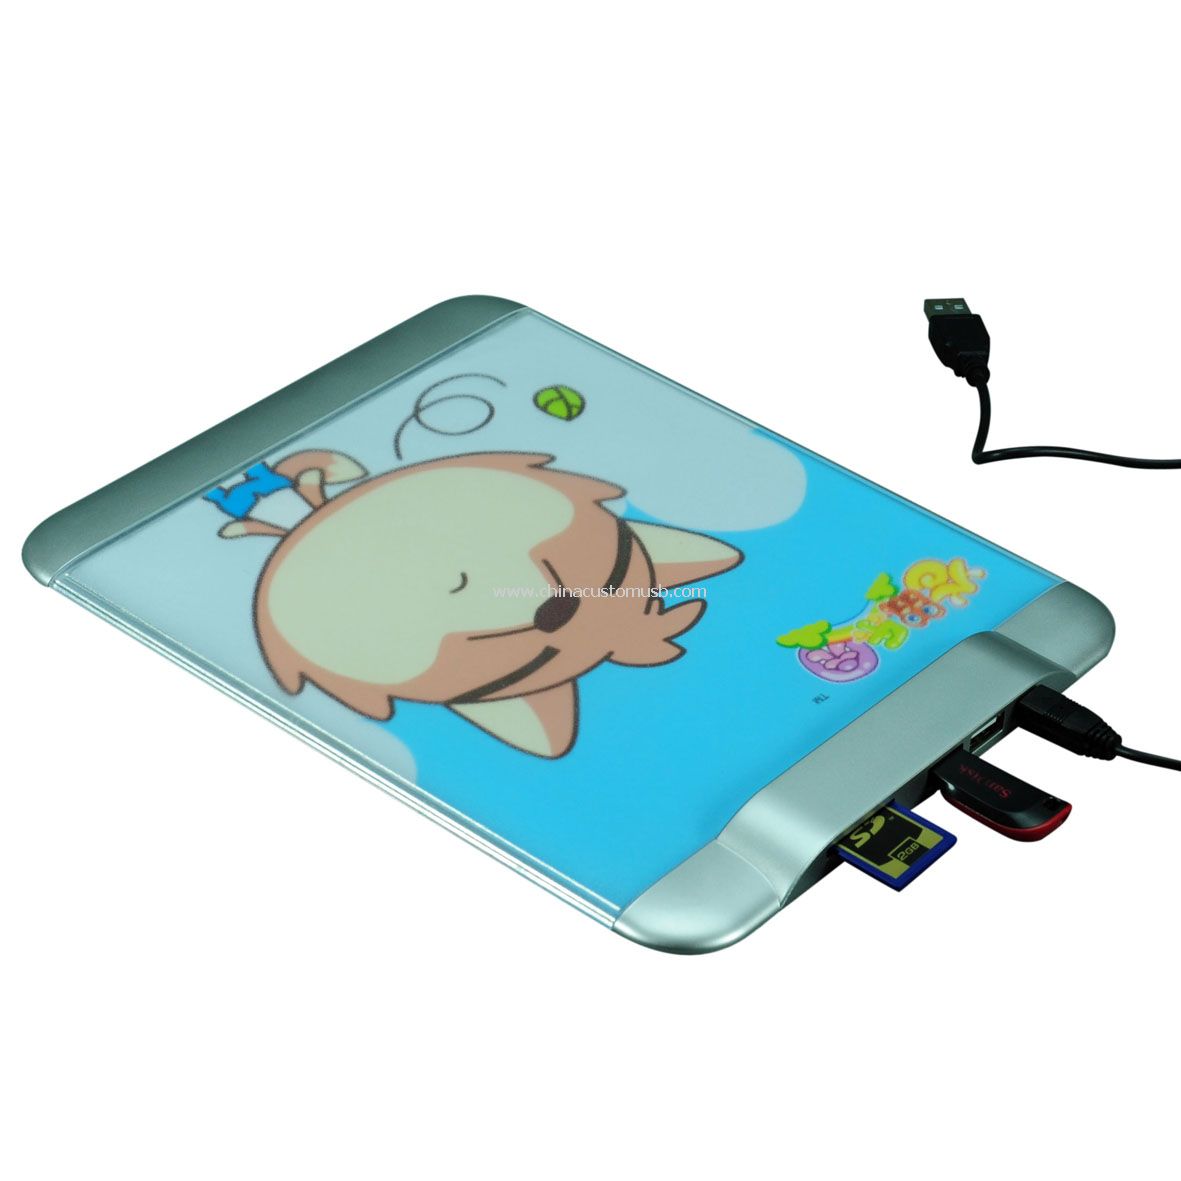 SD TF card reader /USB Hub mouse pad